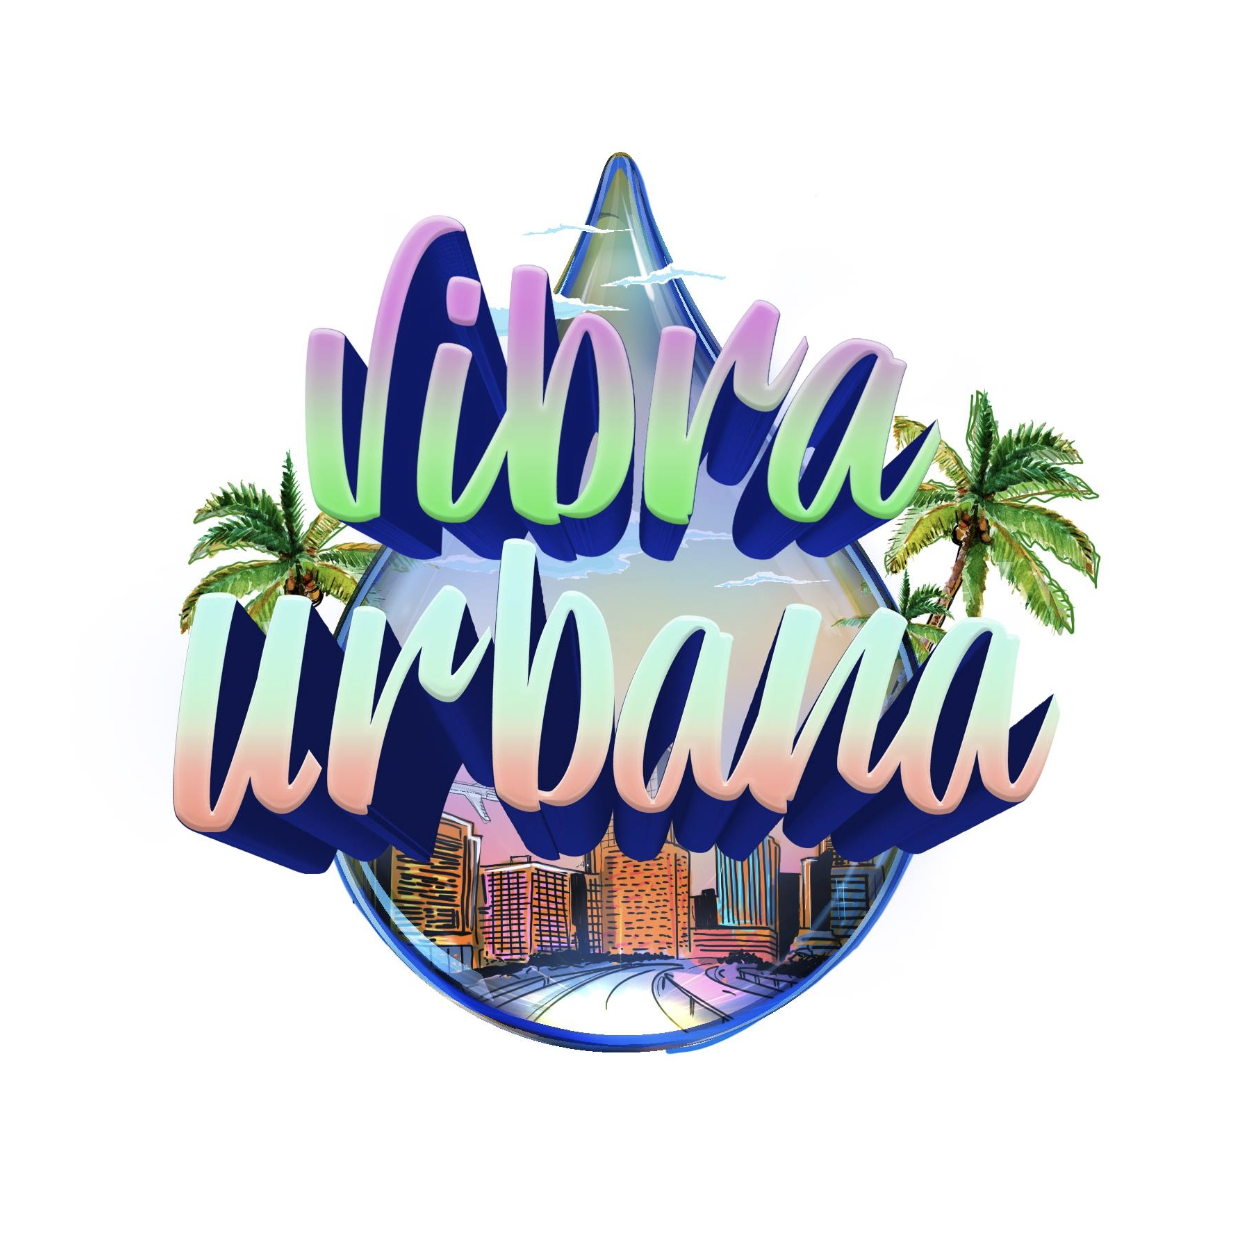 Vibra Urbana Orlando profile image